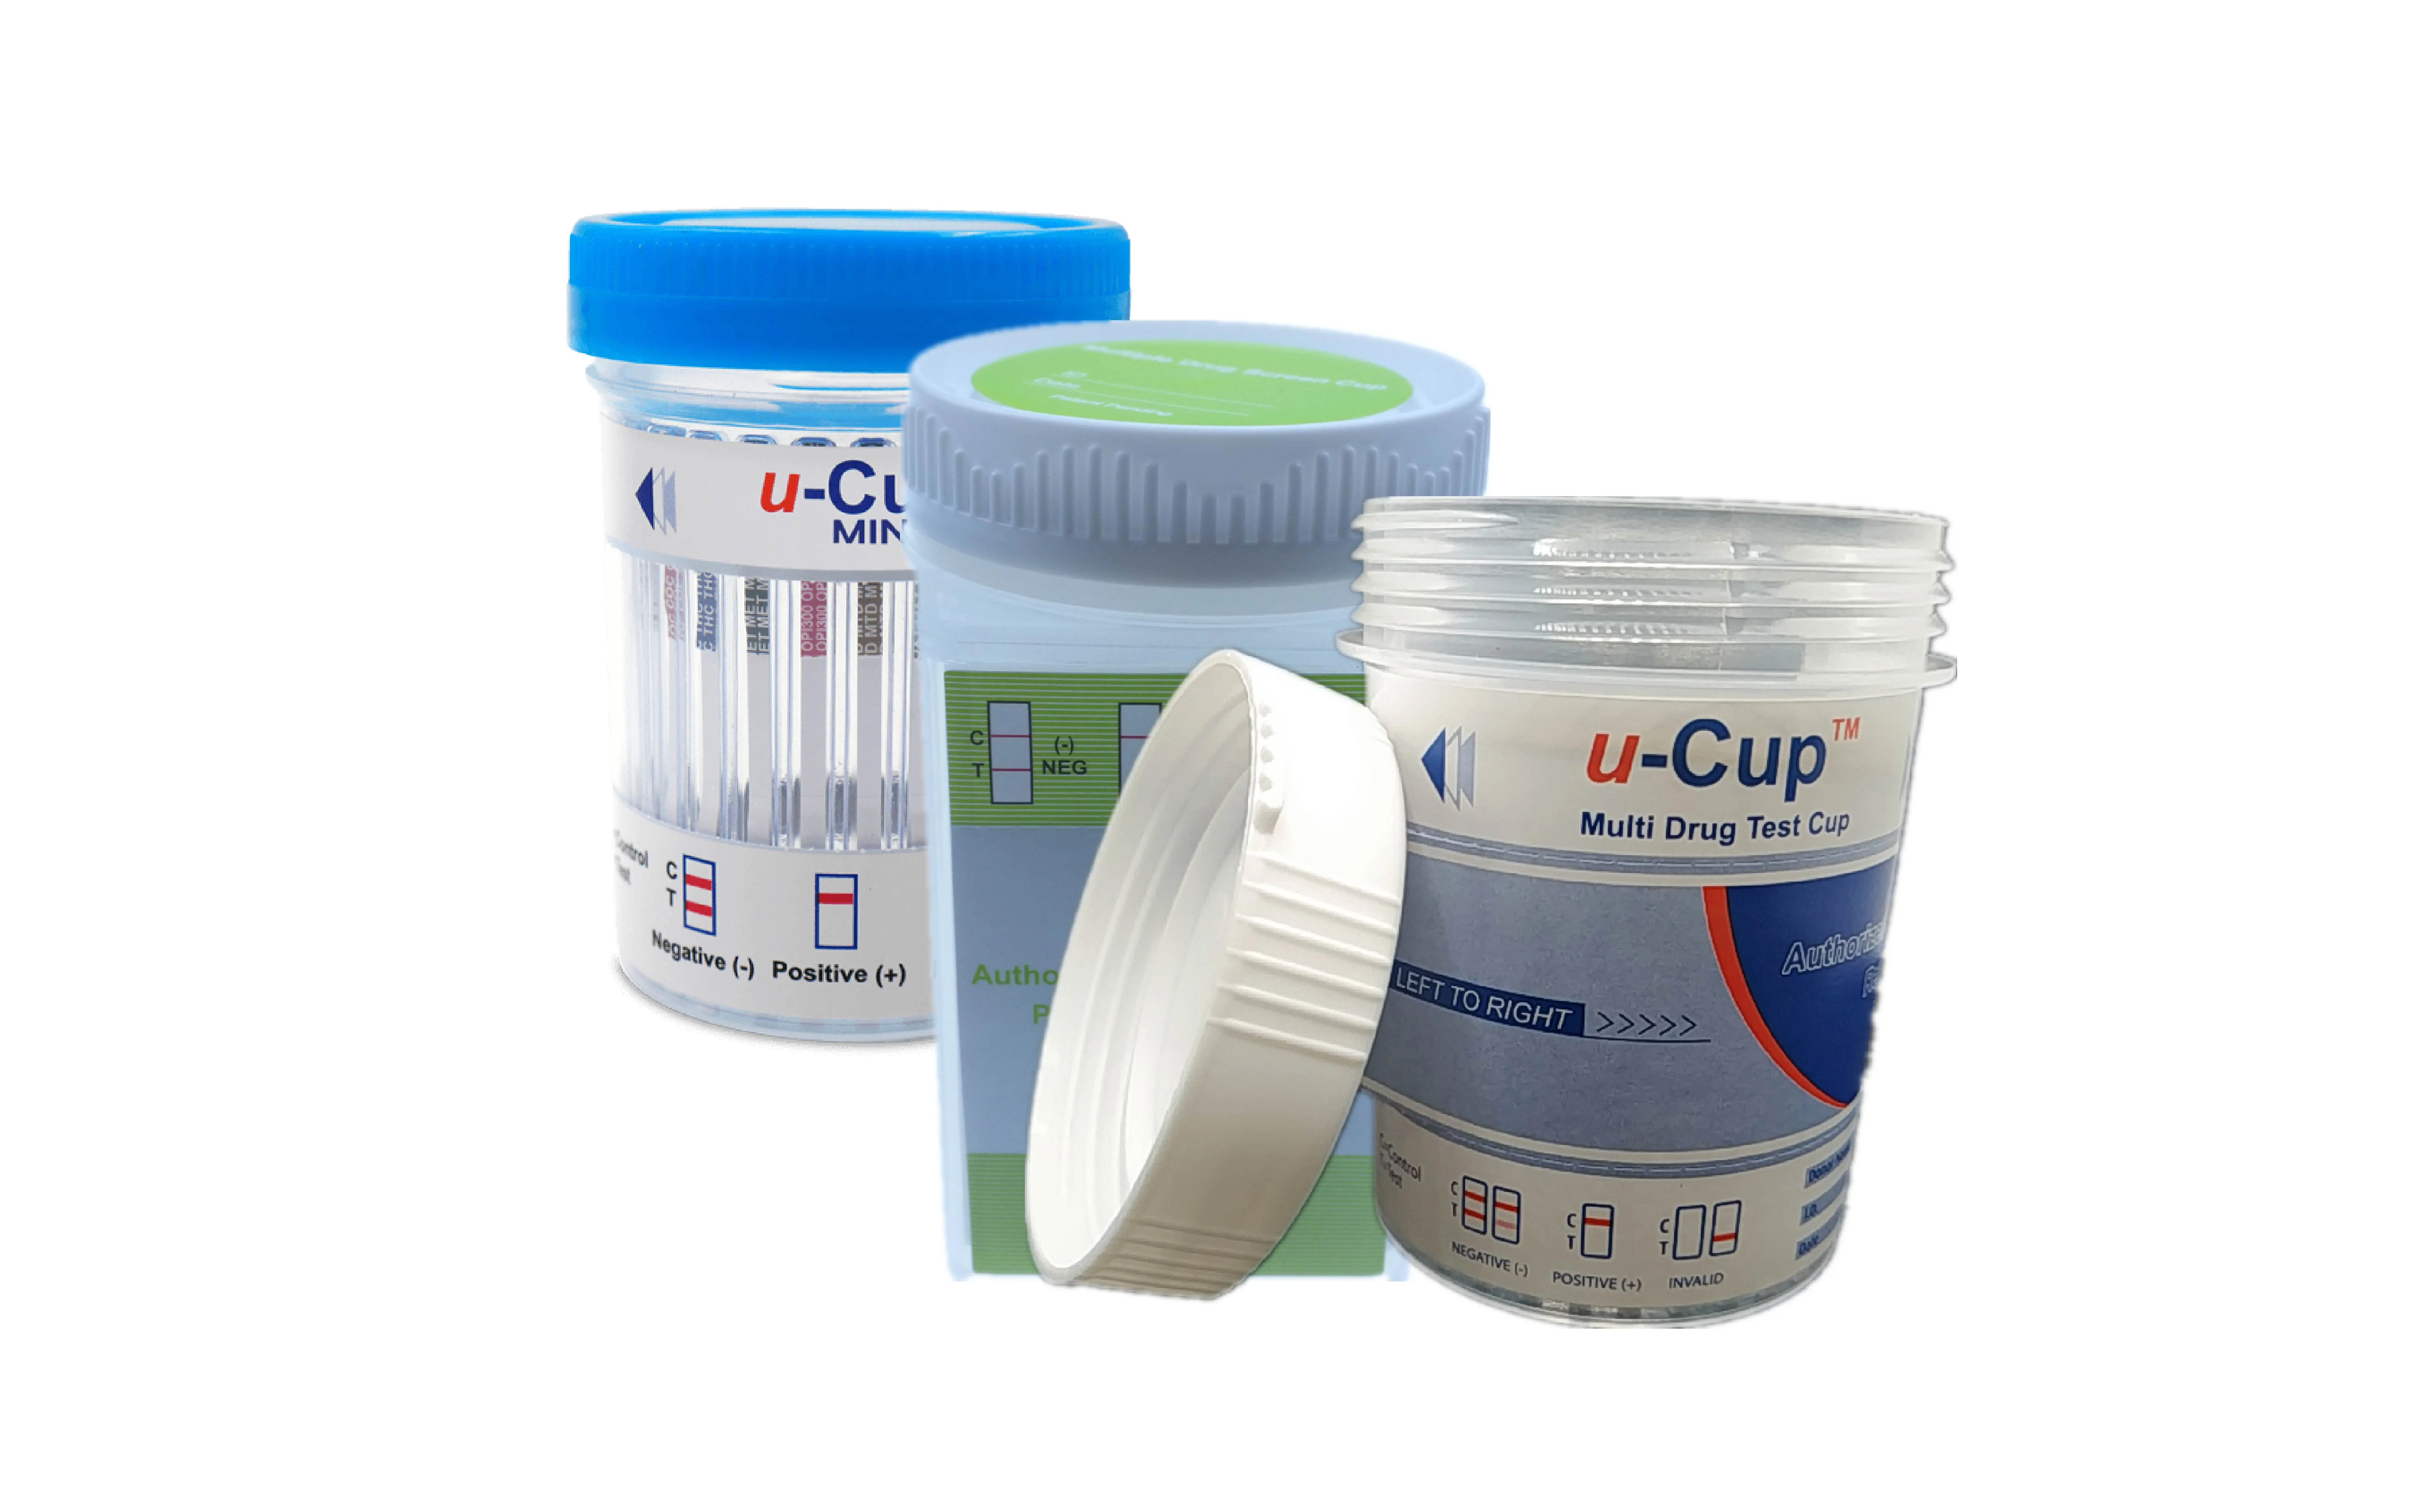 urine test cup